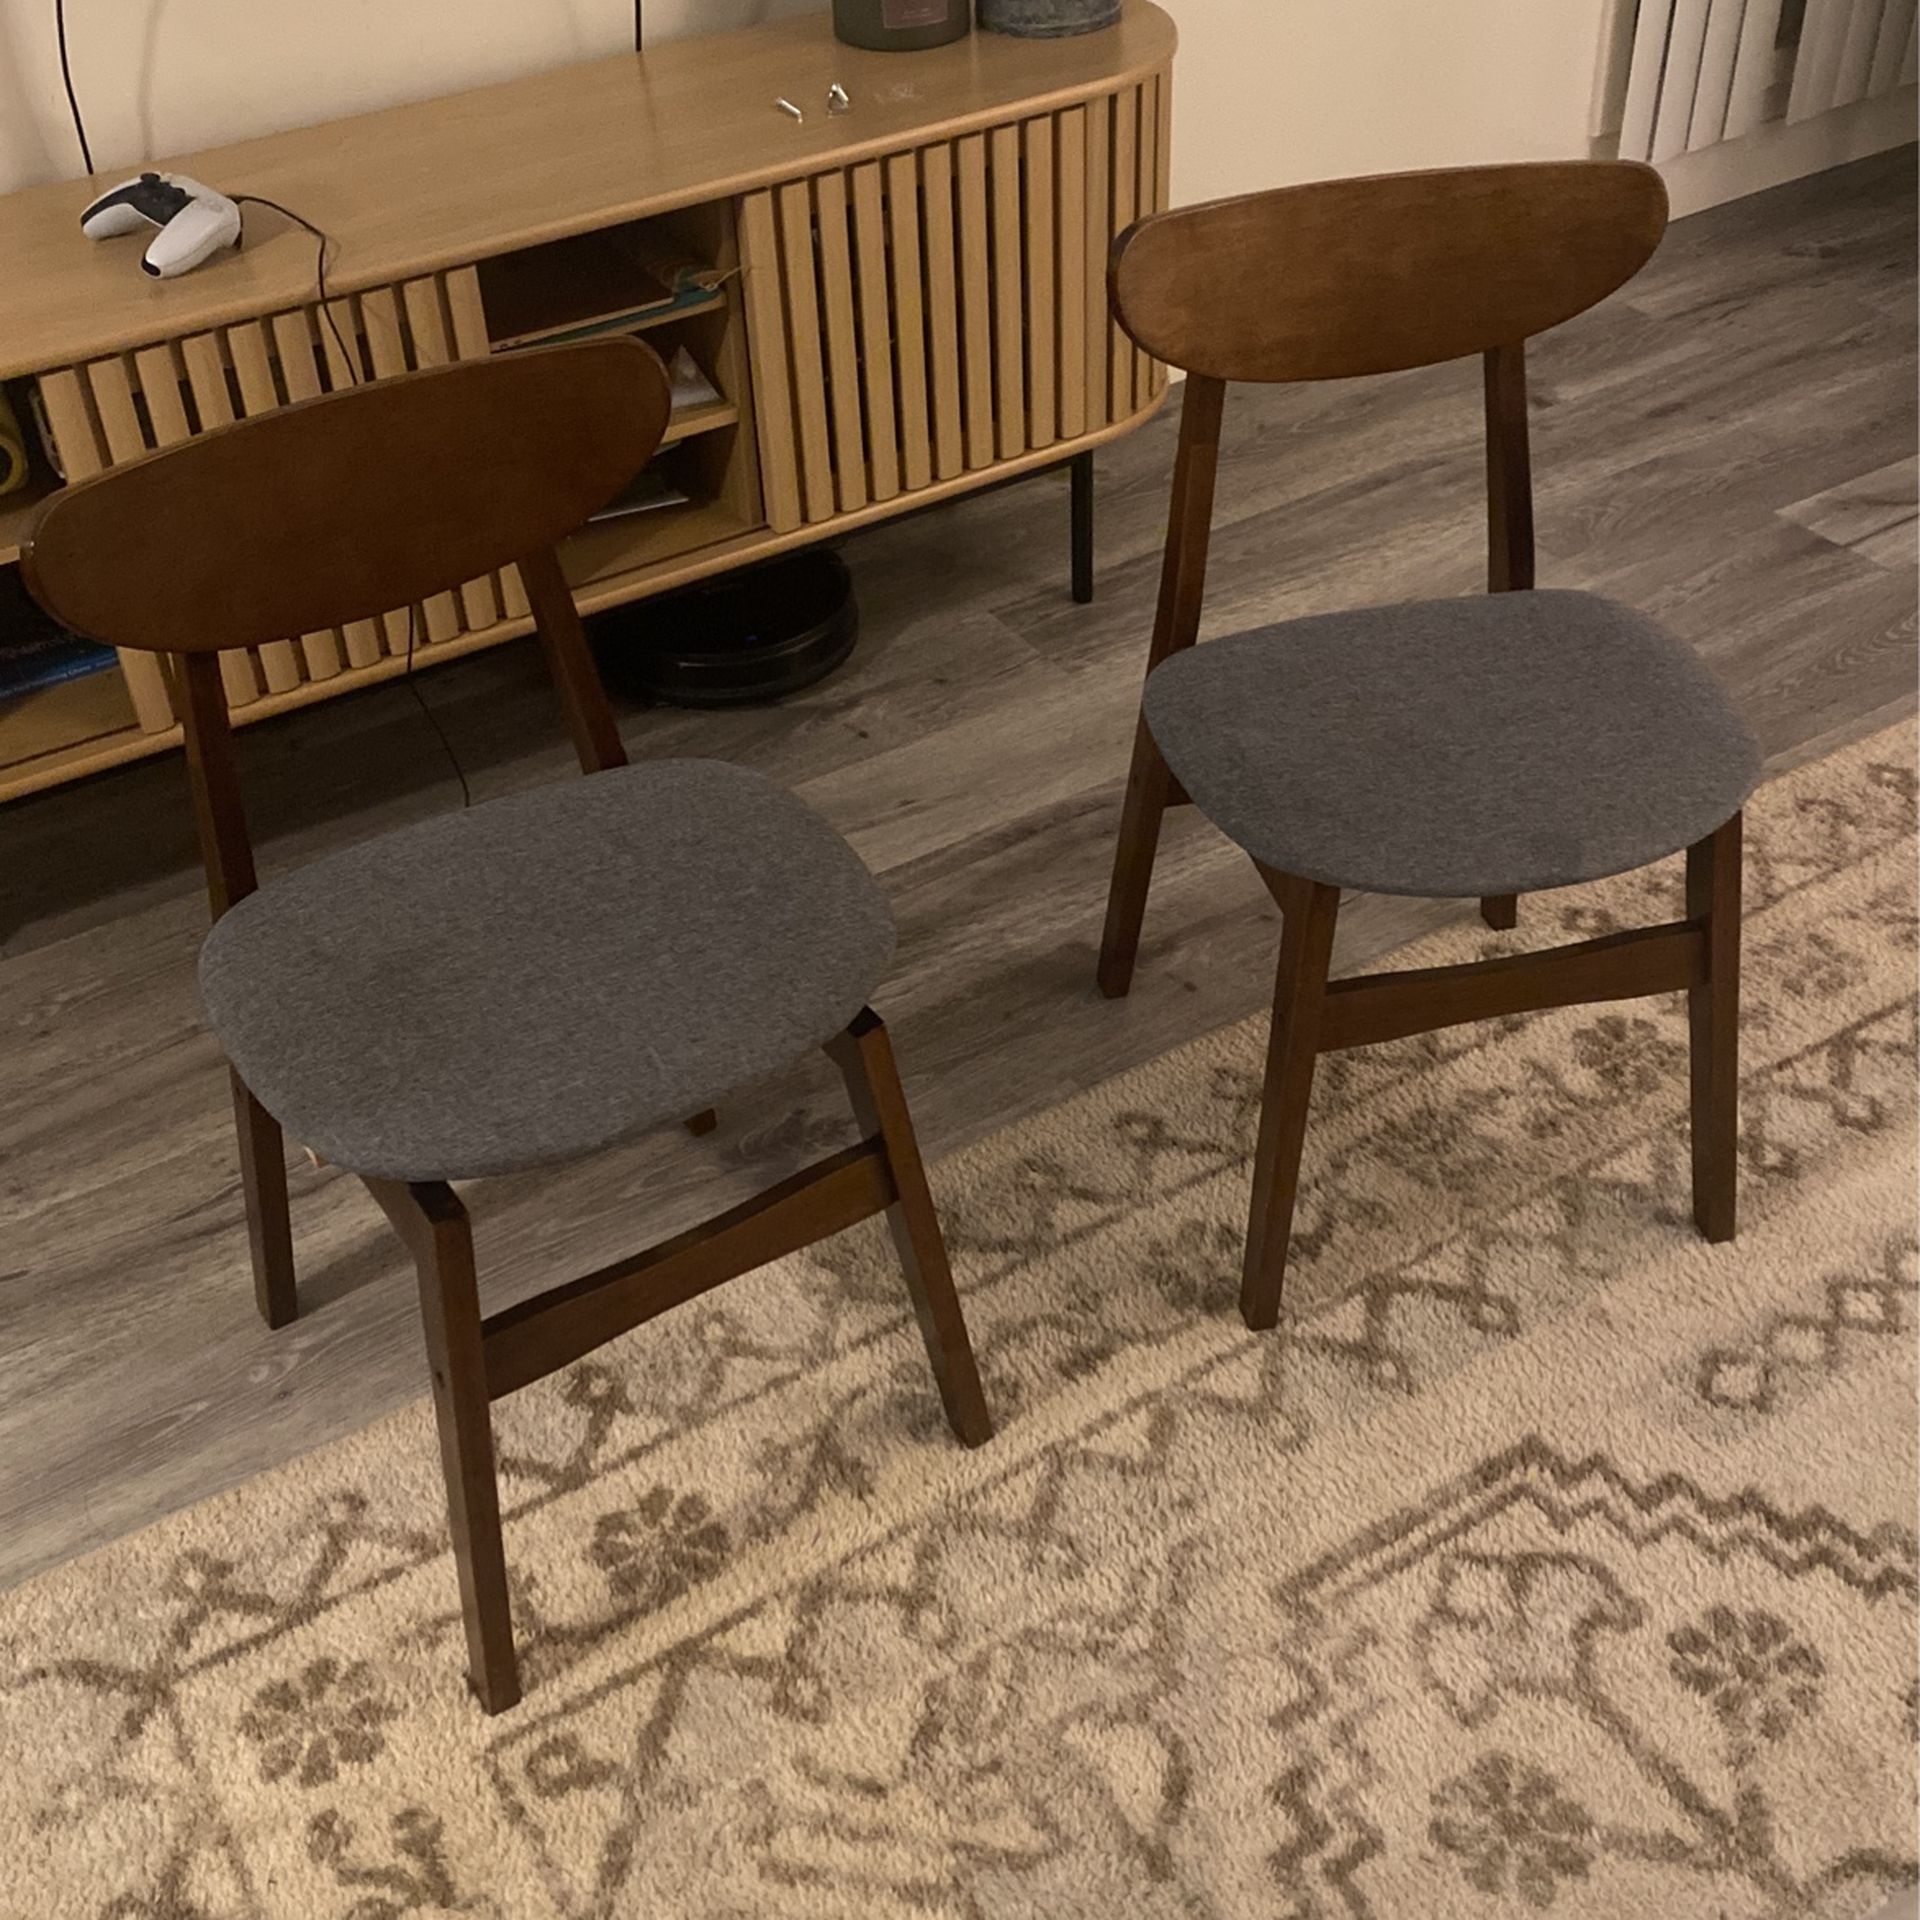 Dining Room Chairs - Boho Chairs - Mid Century Modern Chairs